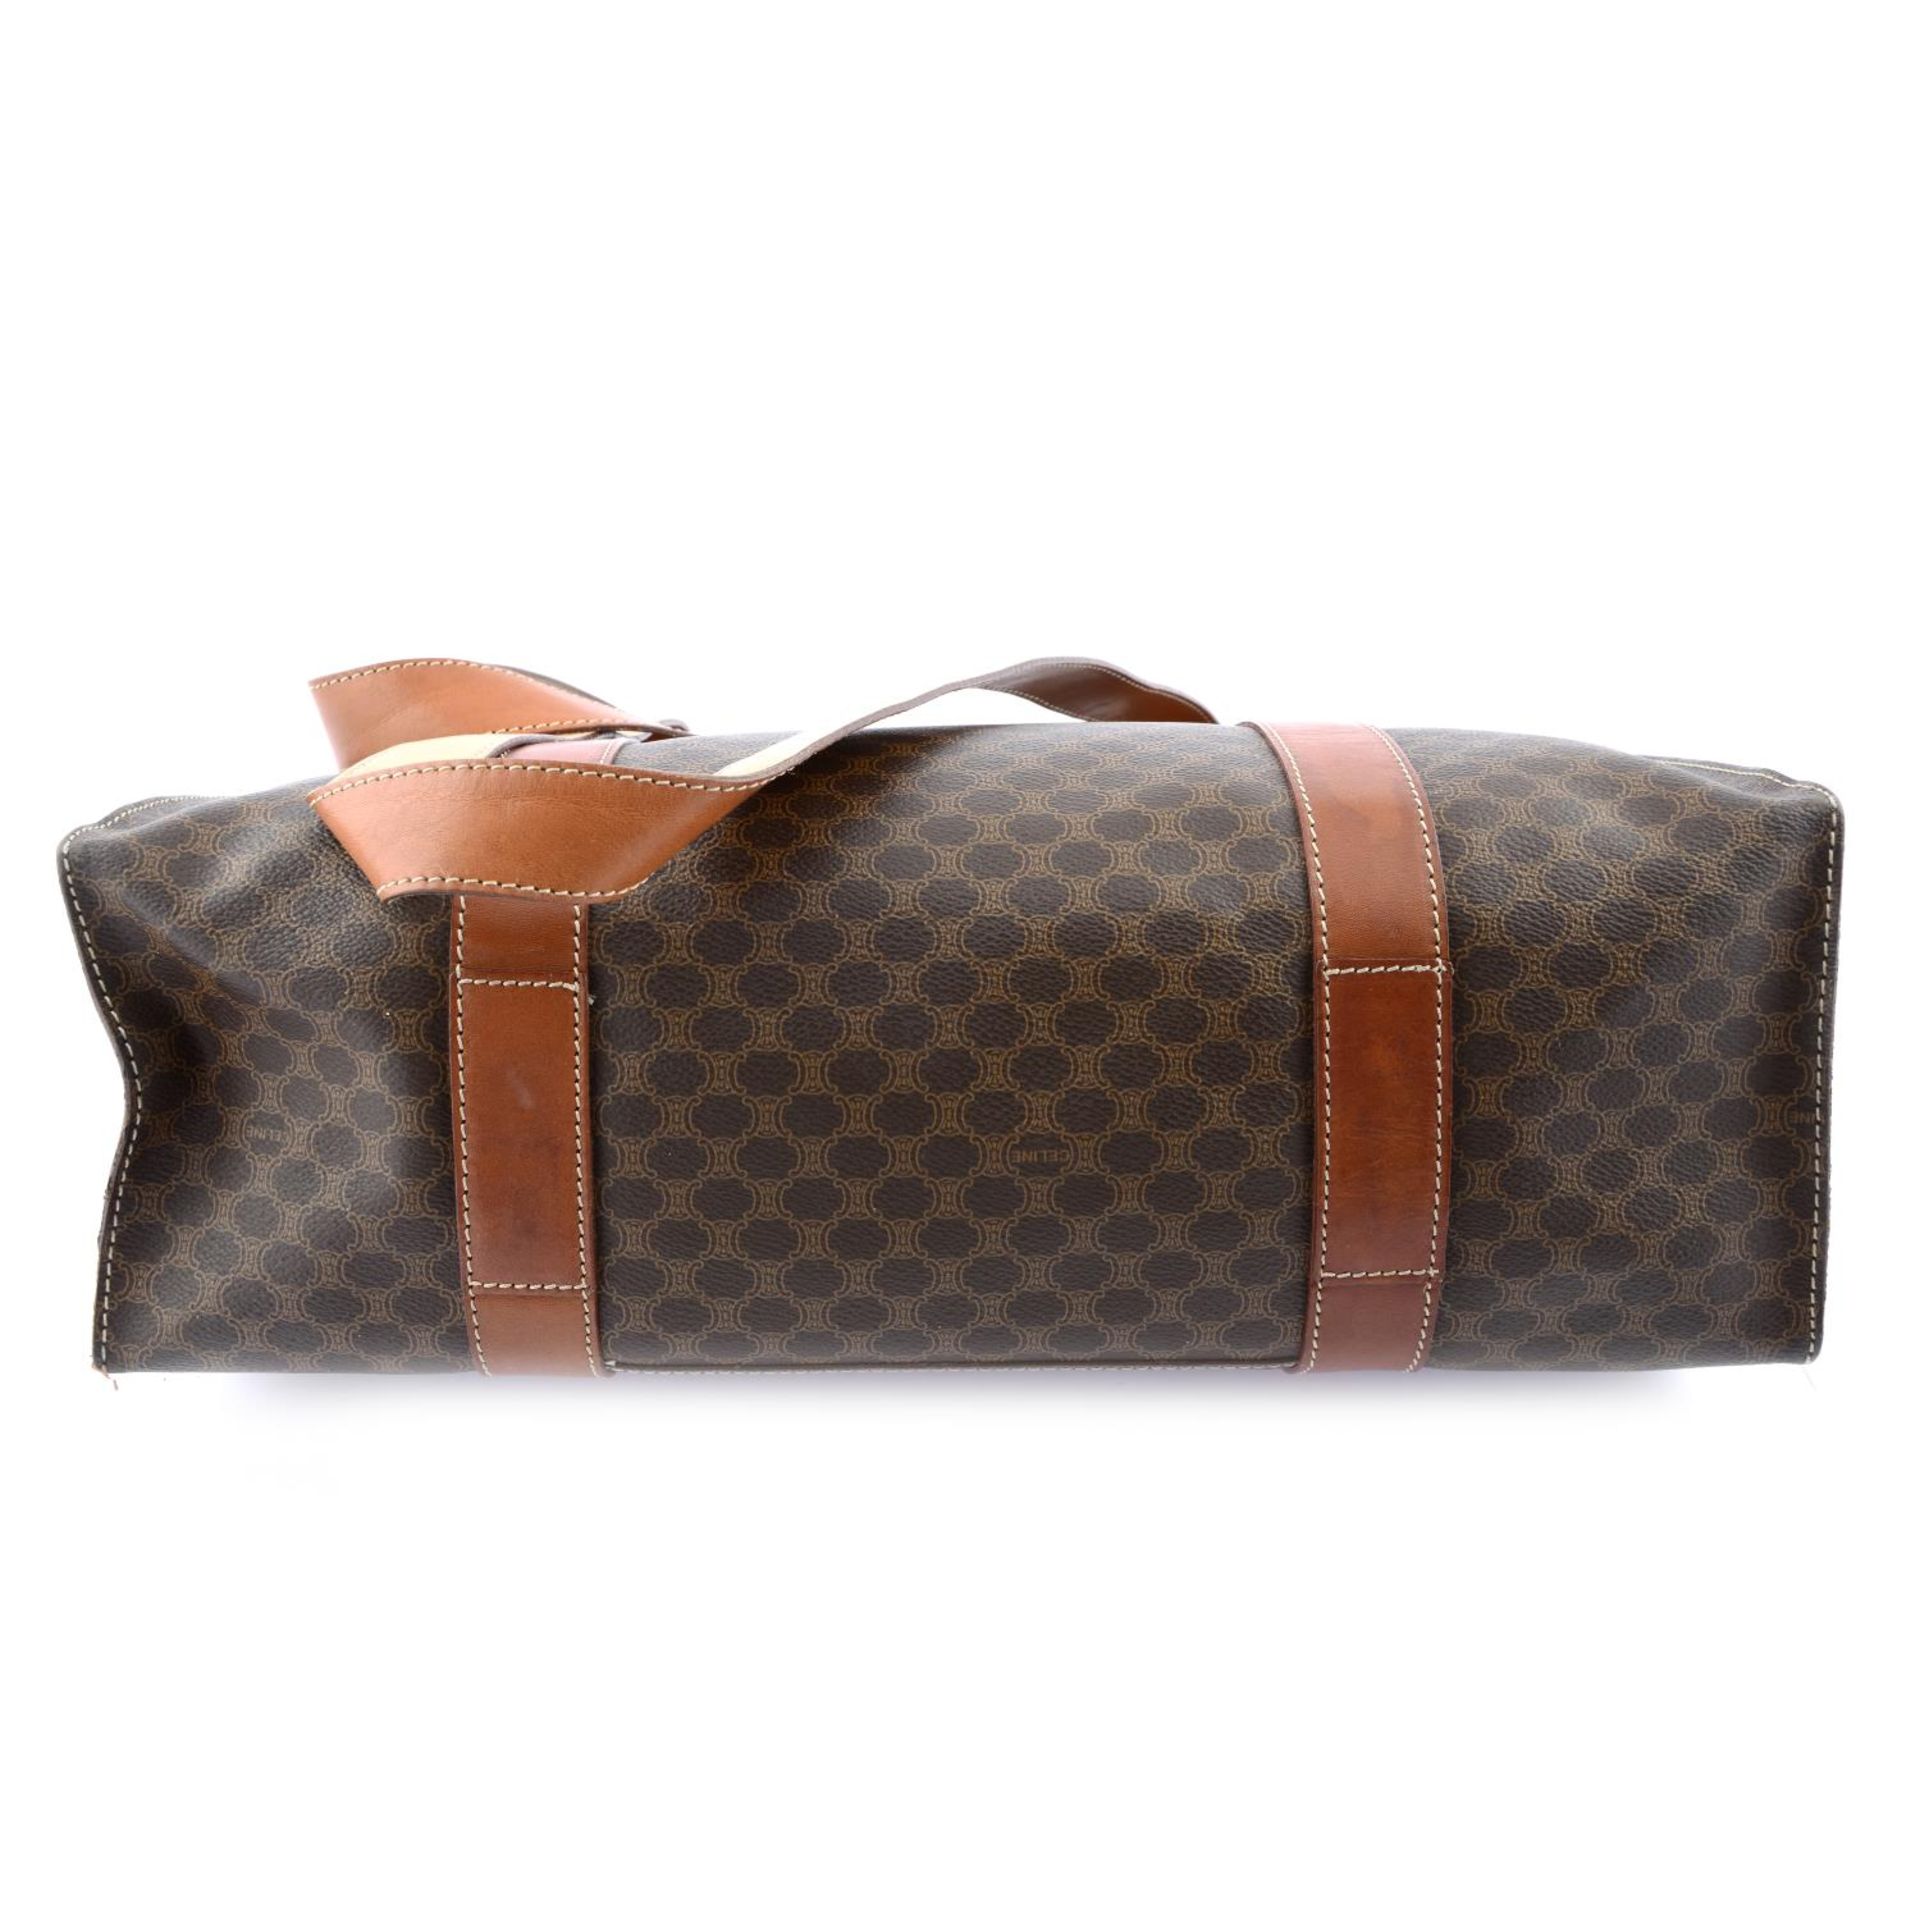 CÉLINE - a Macadam coated canvas handbag. - Image 3 of 7